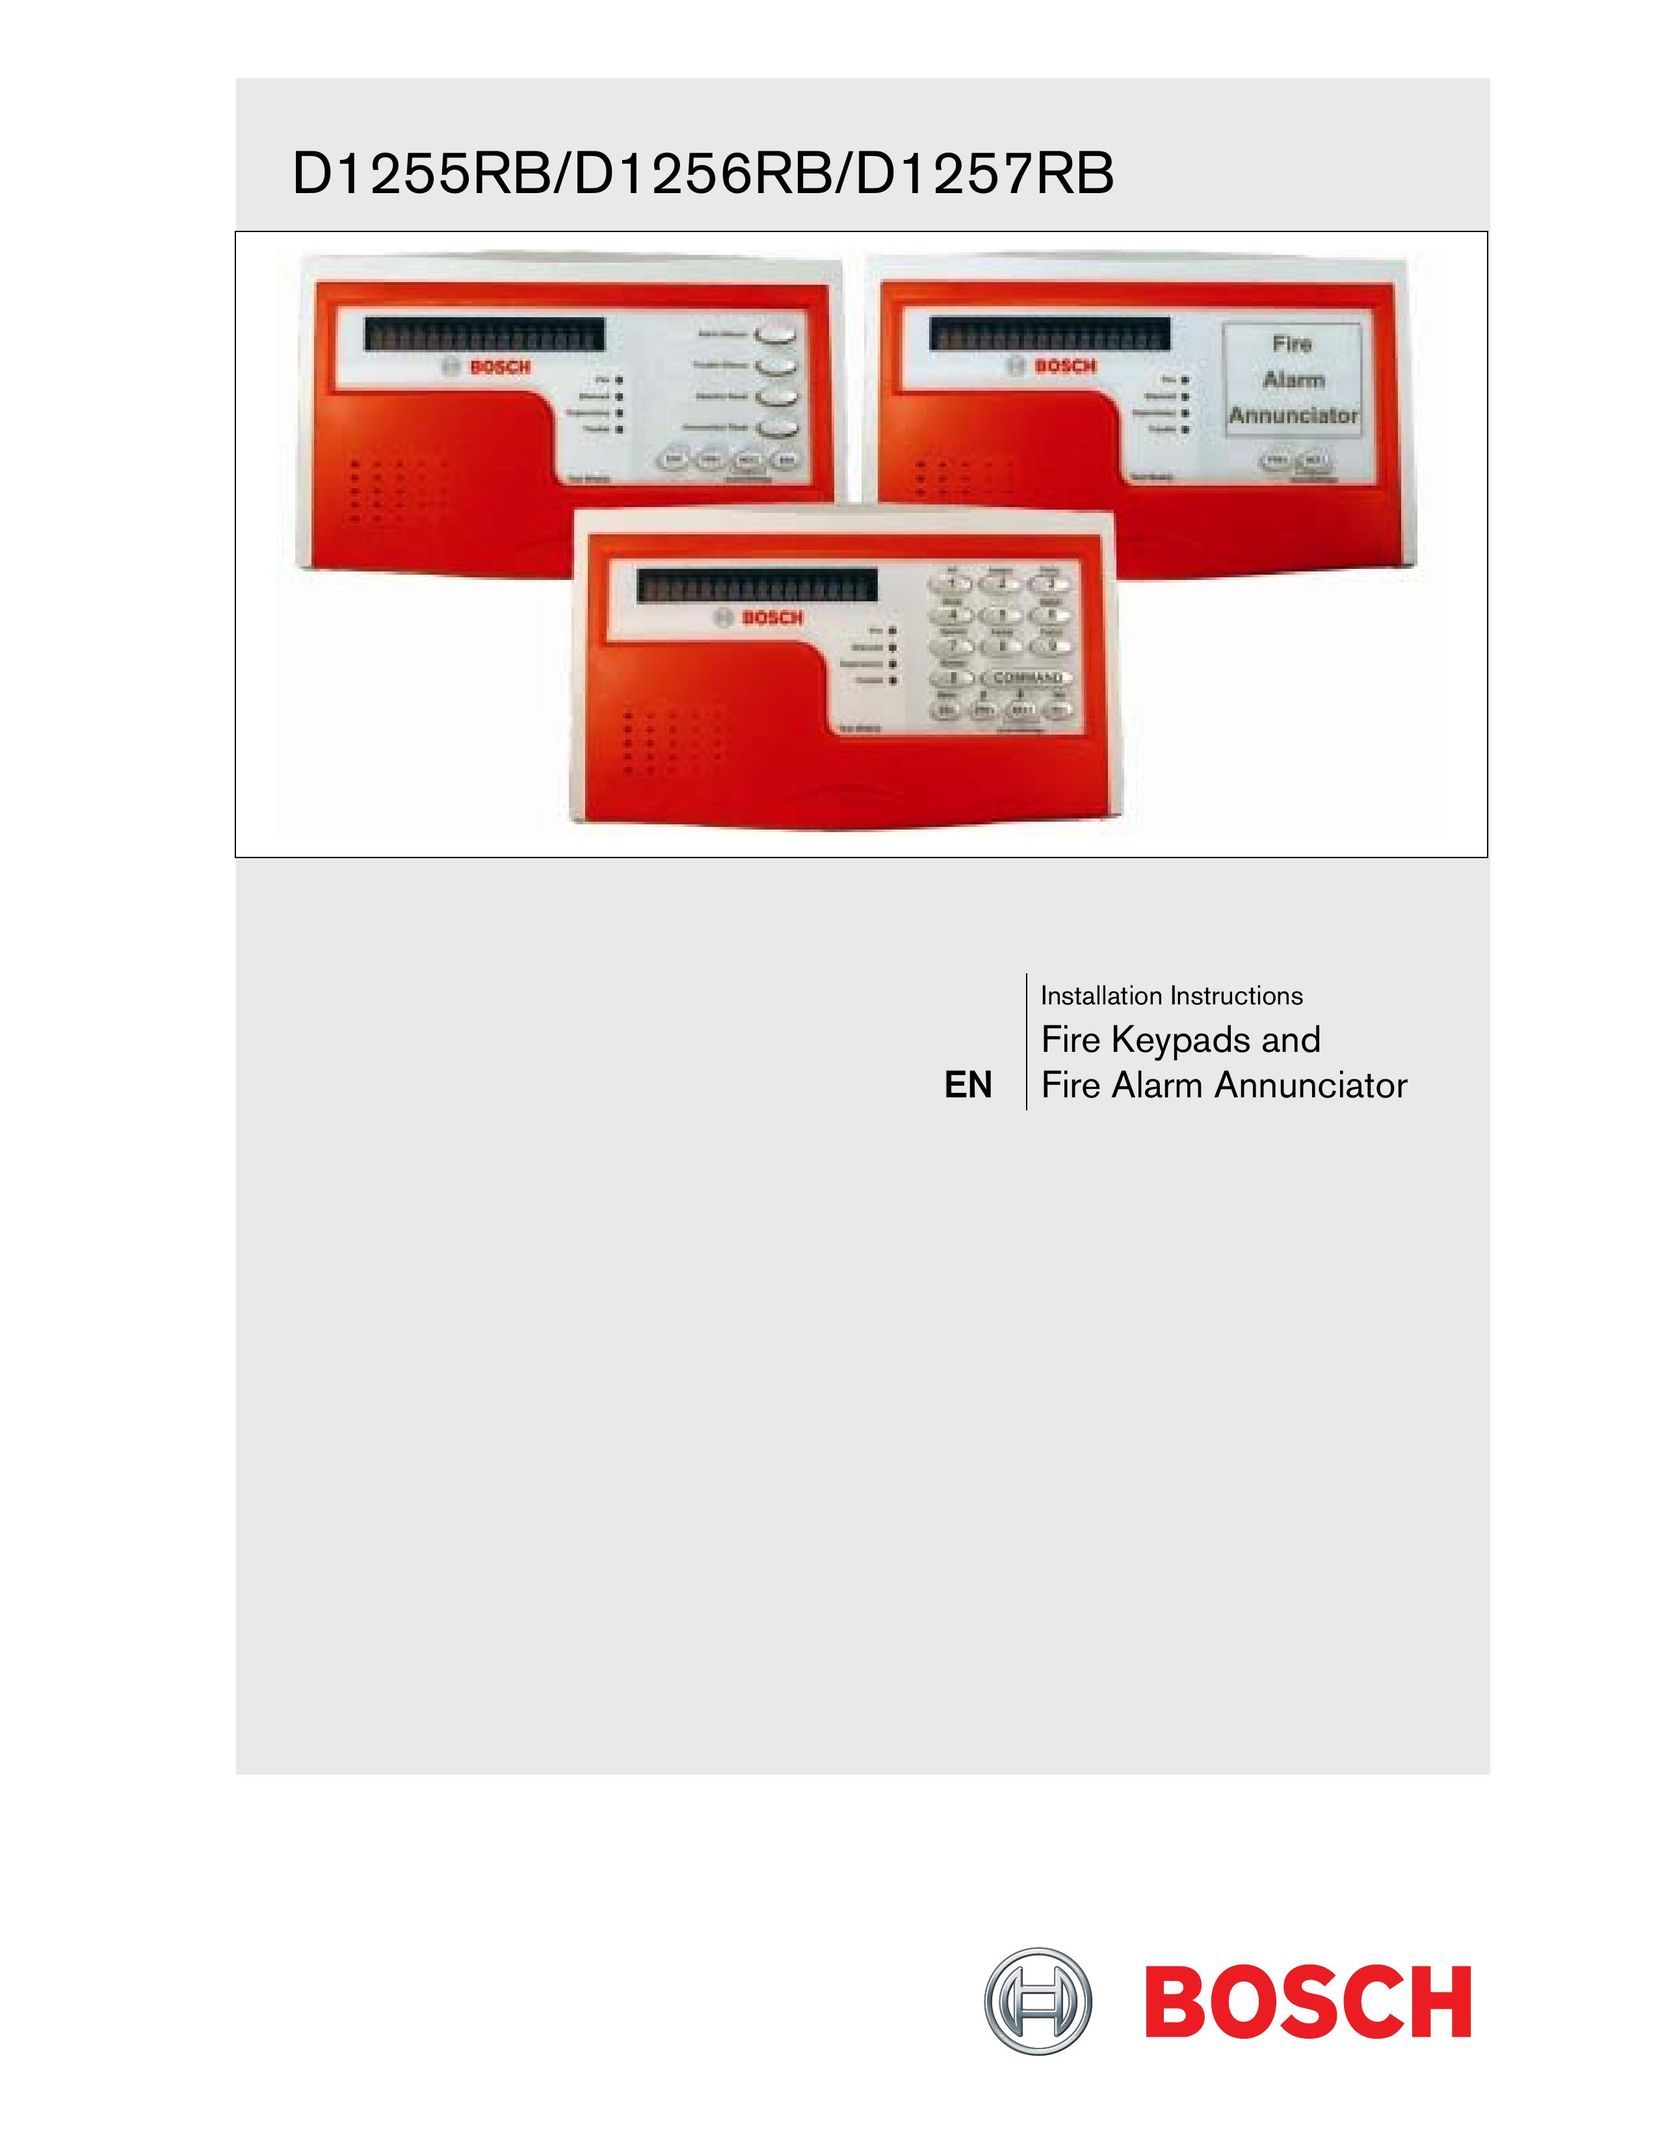 Bosch Appliances D1257RB Smoke Alarm User Manual